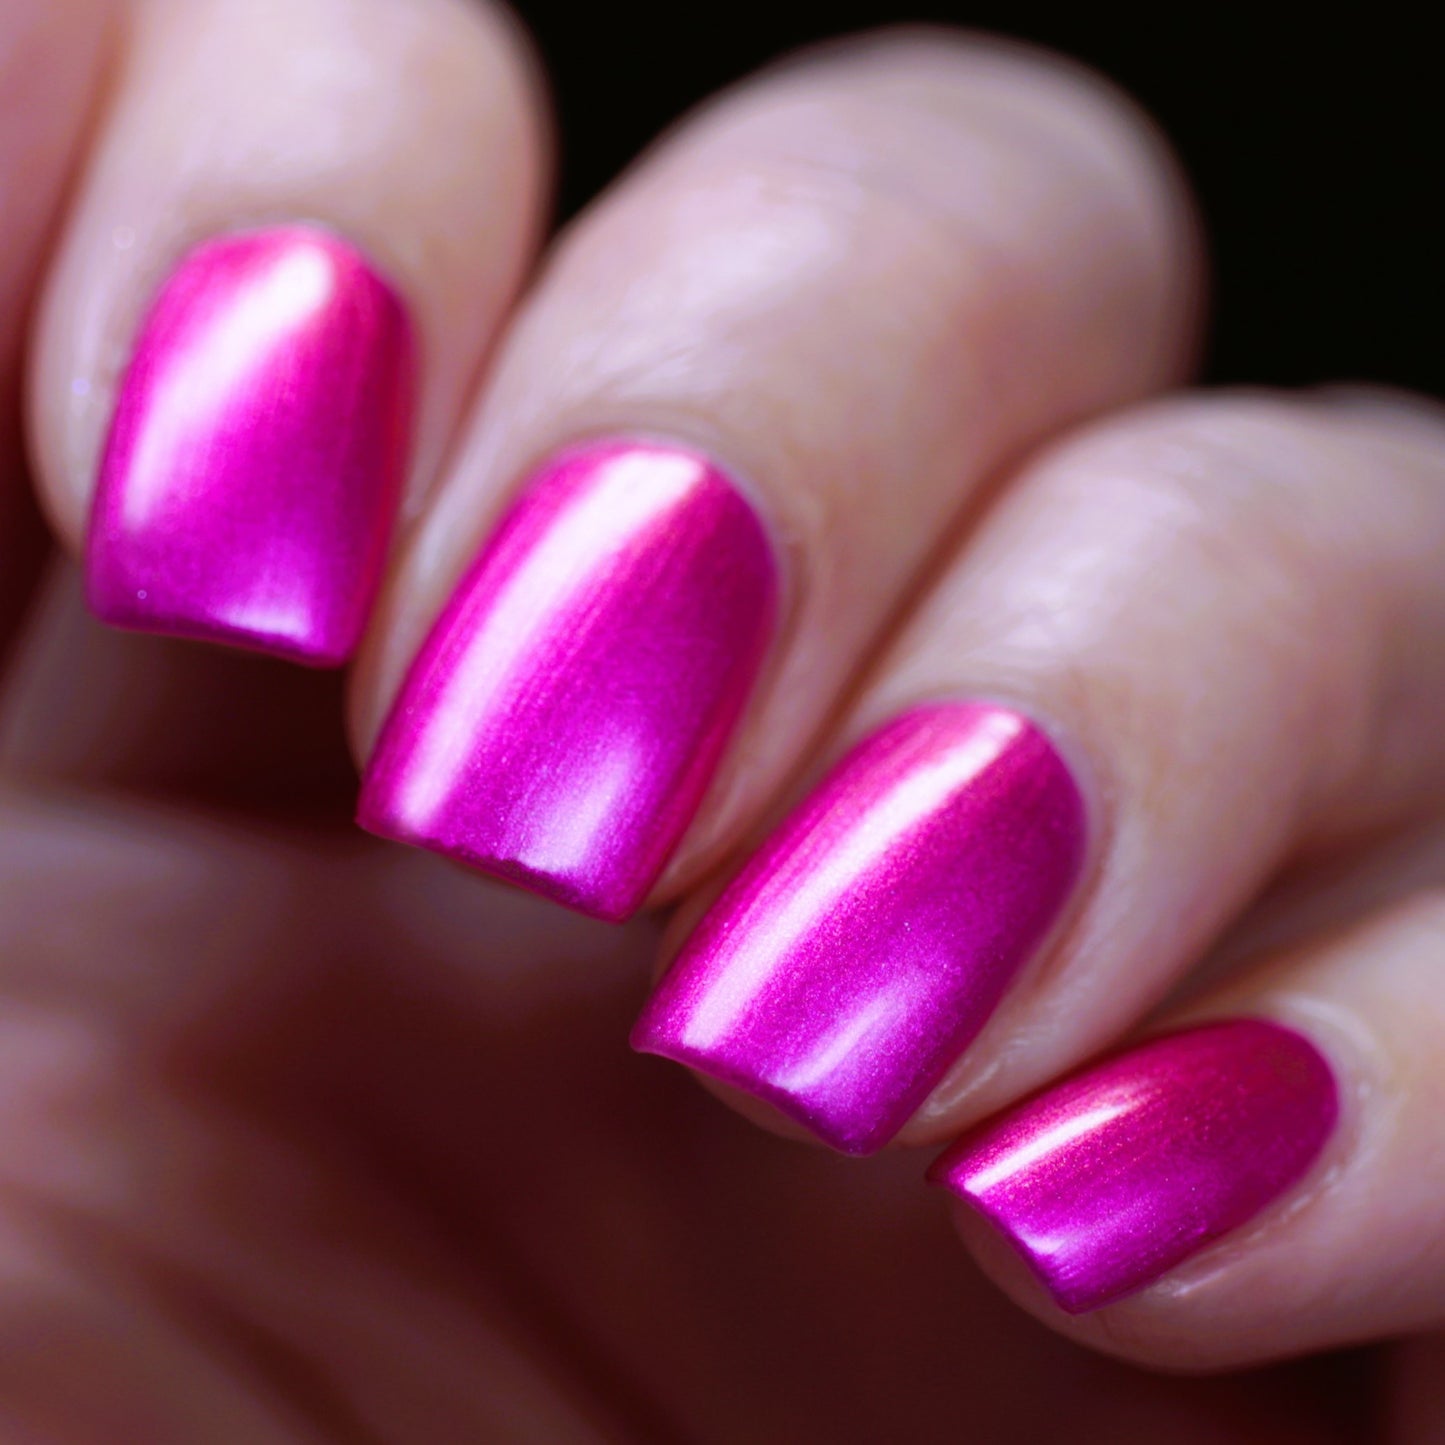 Some Pink Shimmer - Pink Shimmer Nail Polish